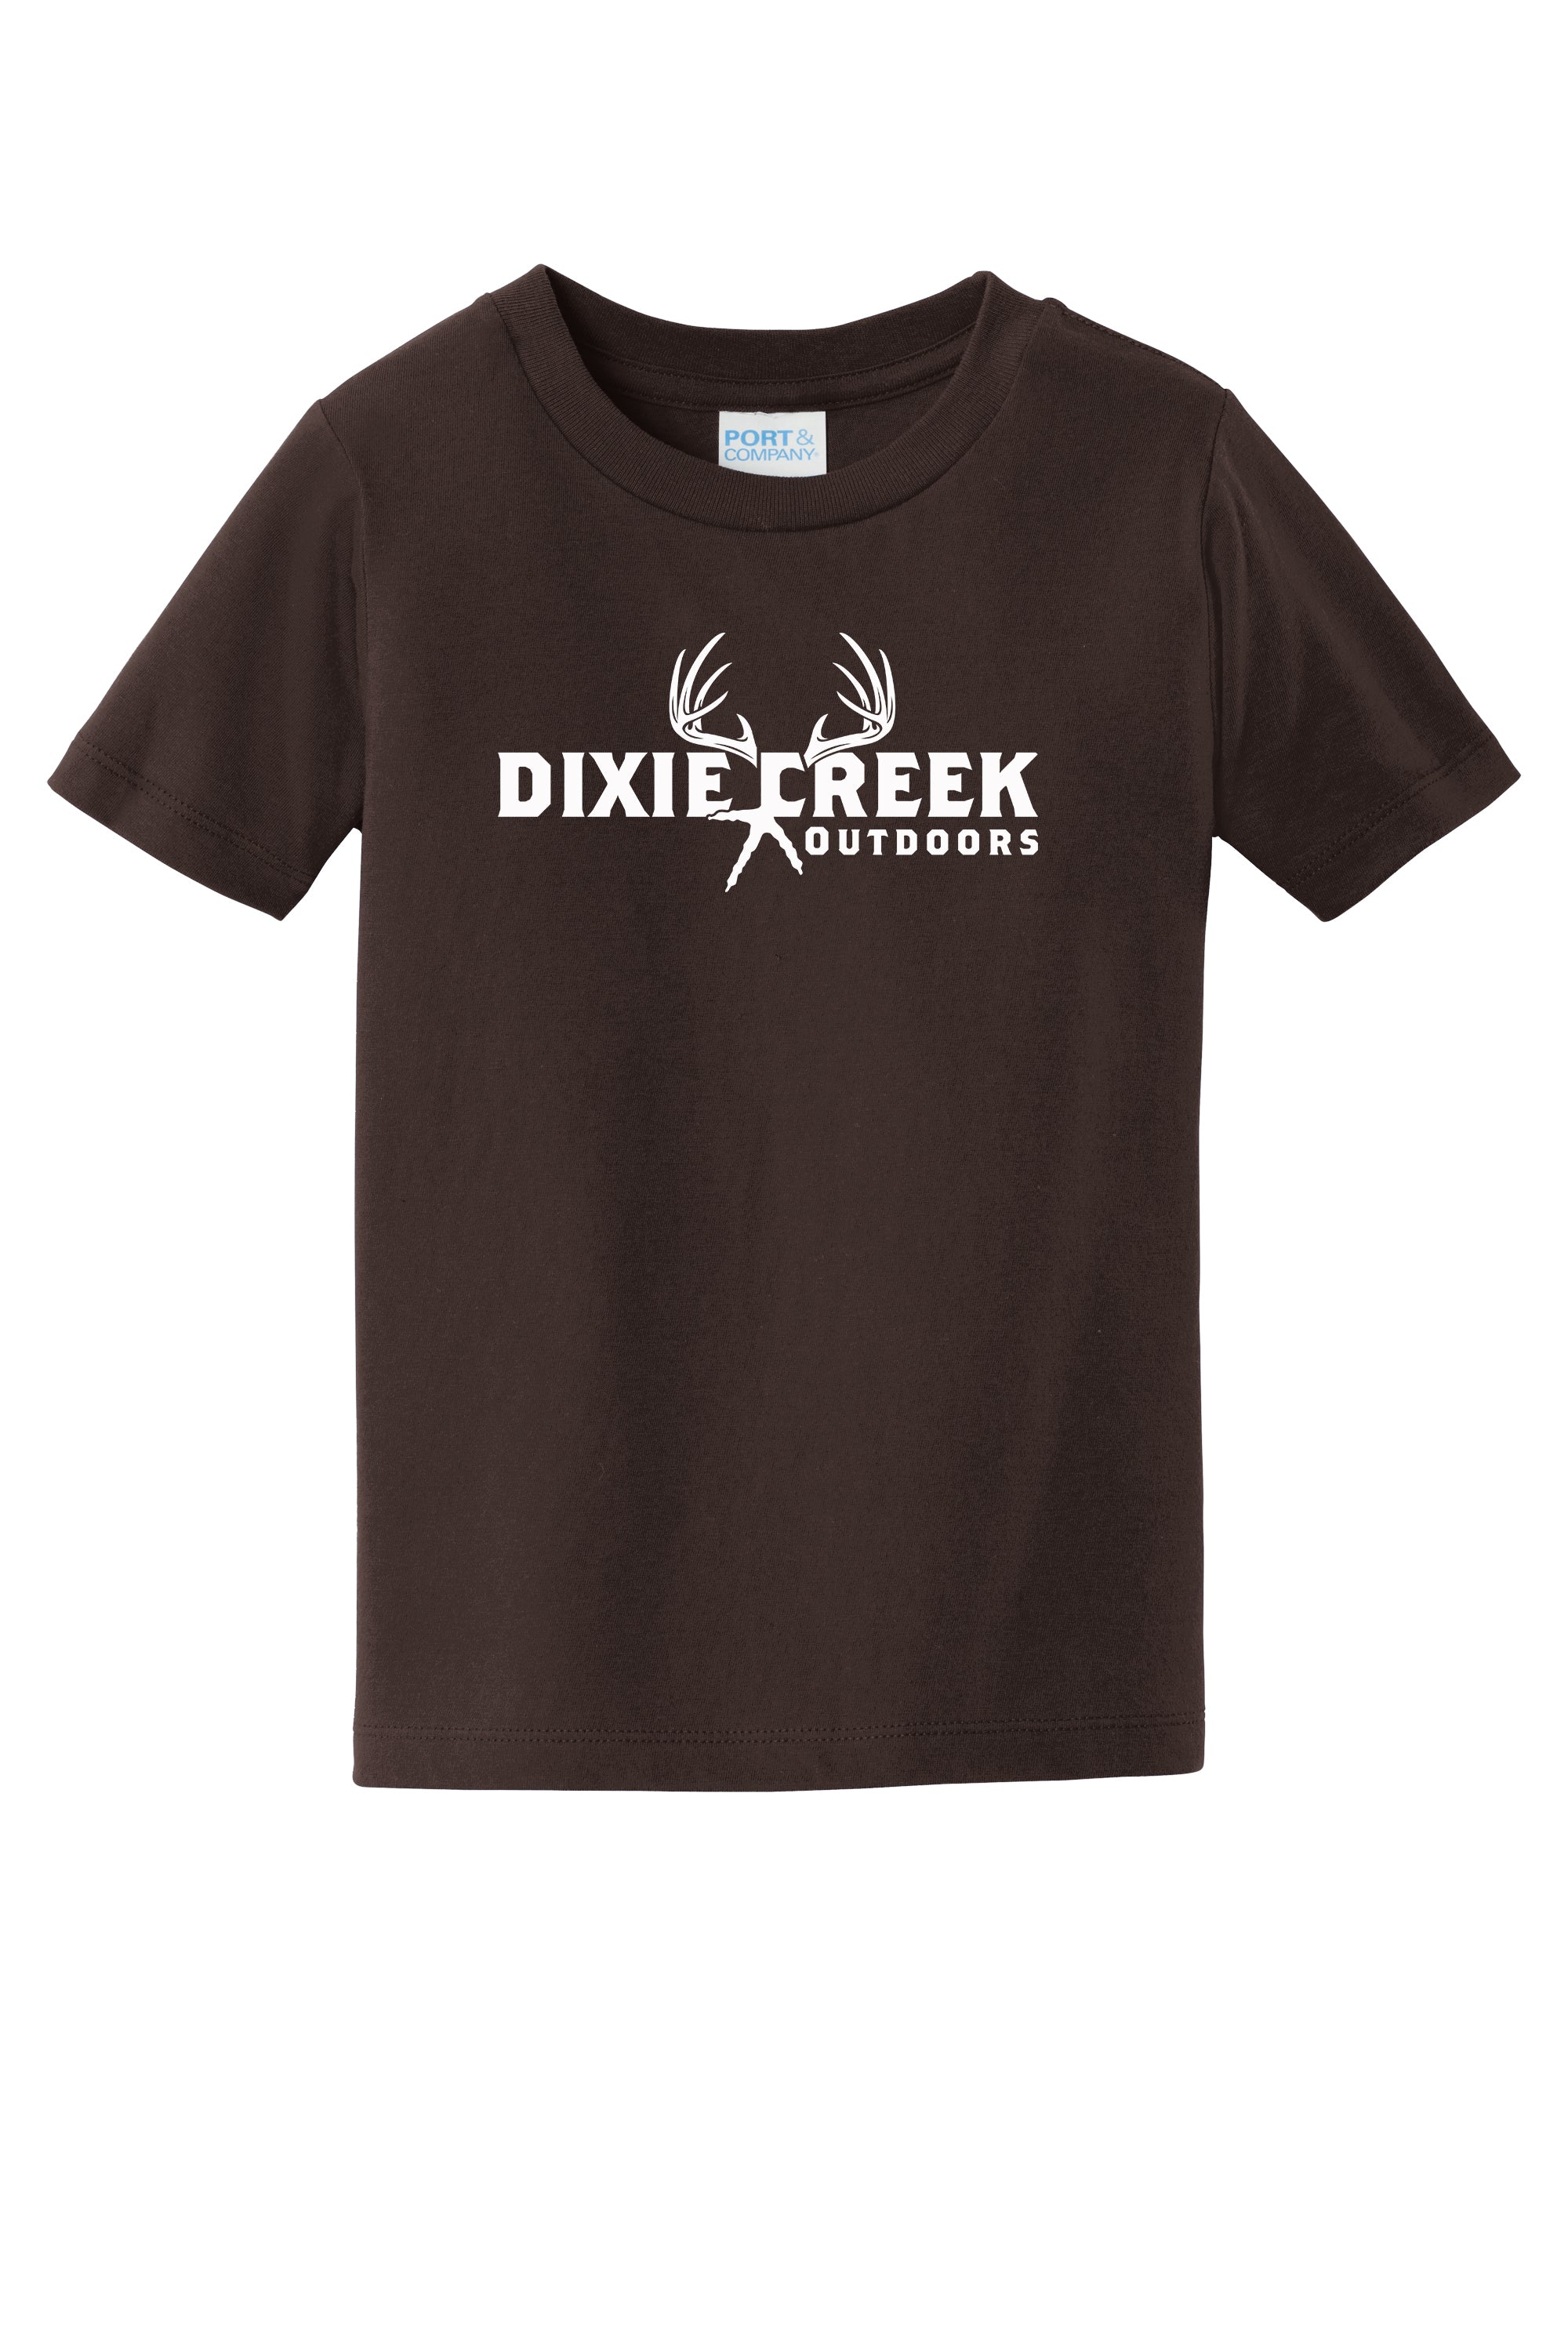 Dixie Creek Waterfowl